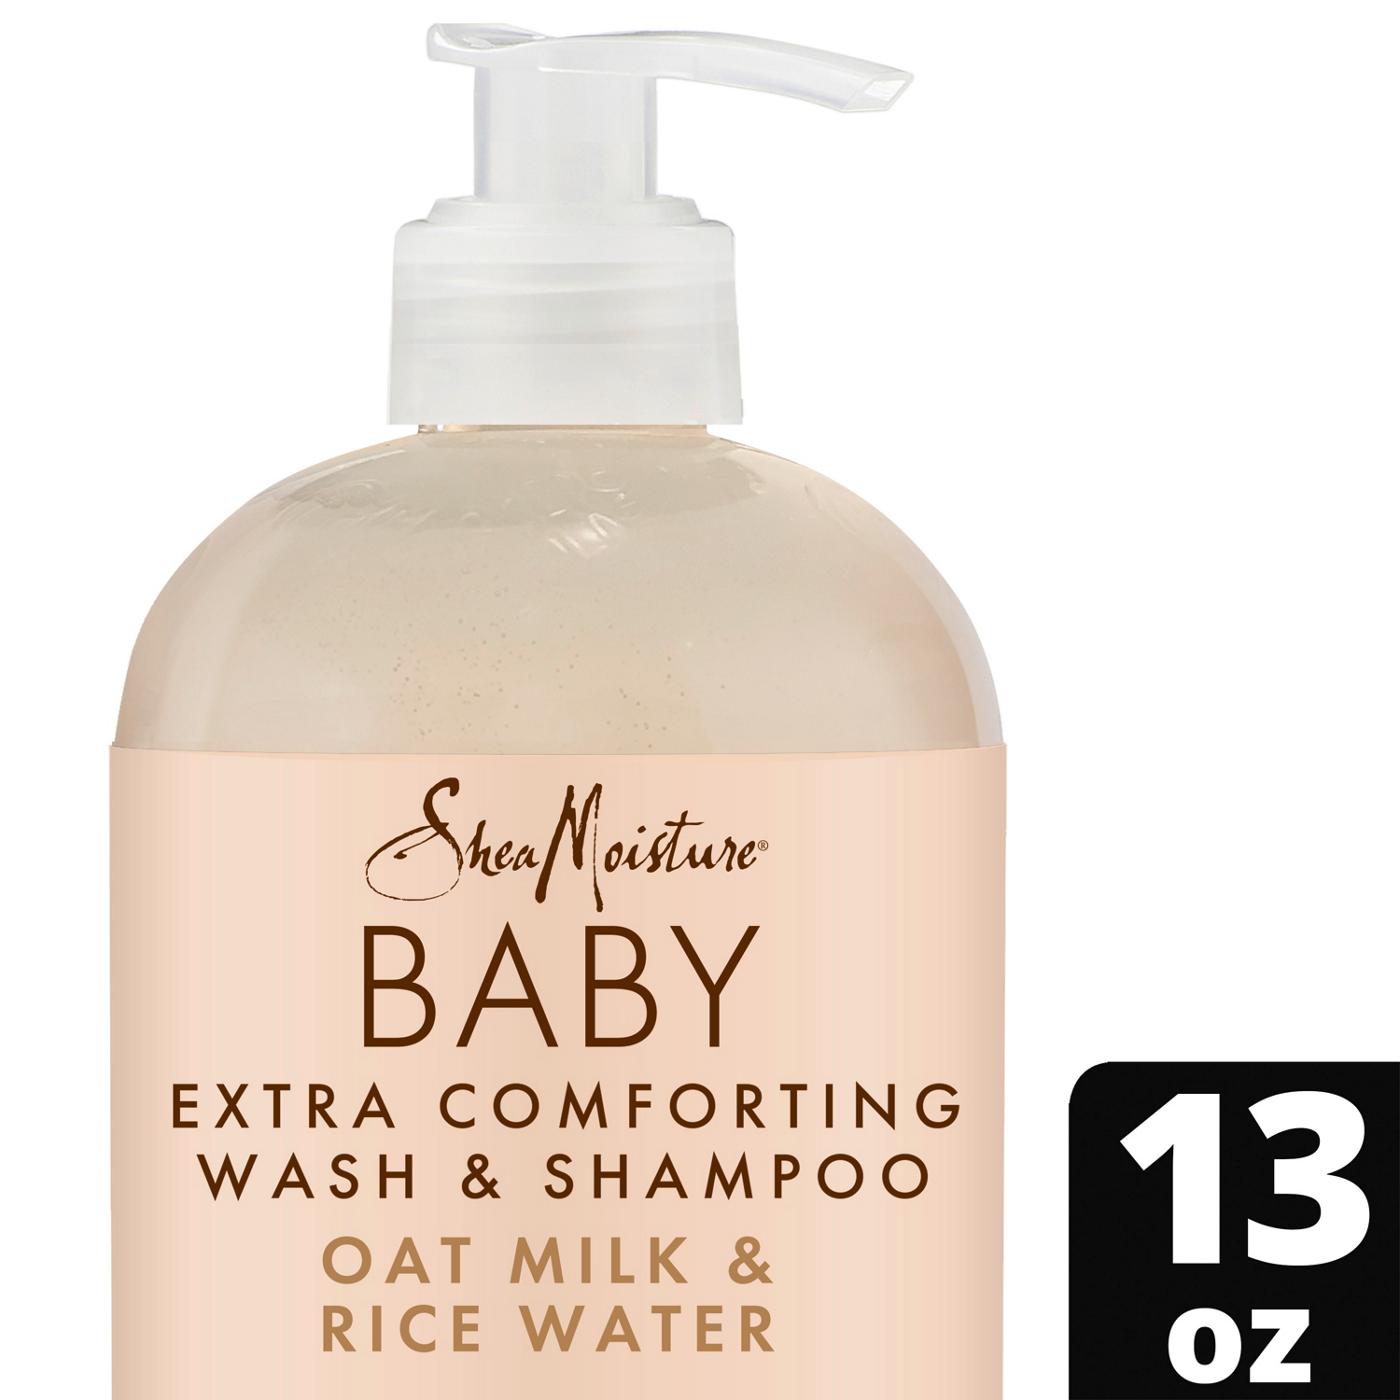 SheaMoisture Baby Wash + Shampoo - Oat Milk & Rice Water; image 2 of 7